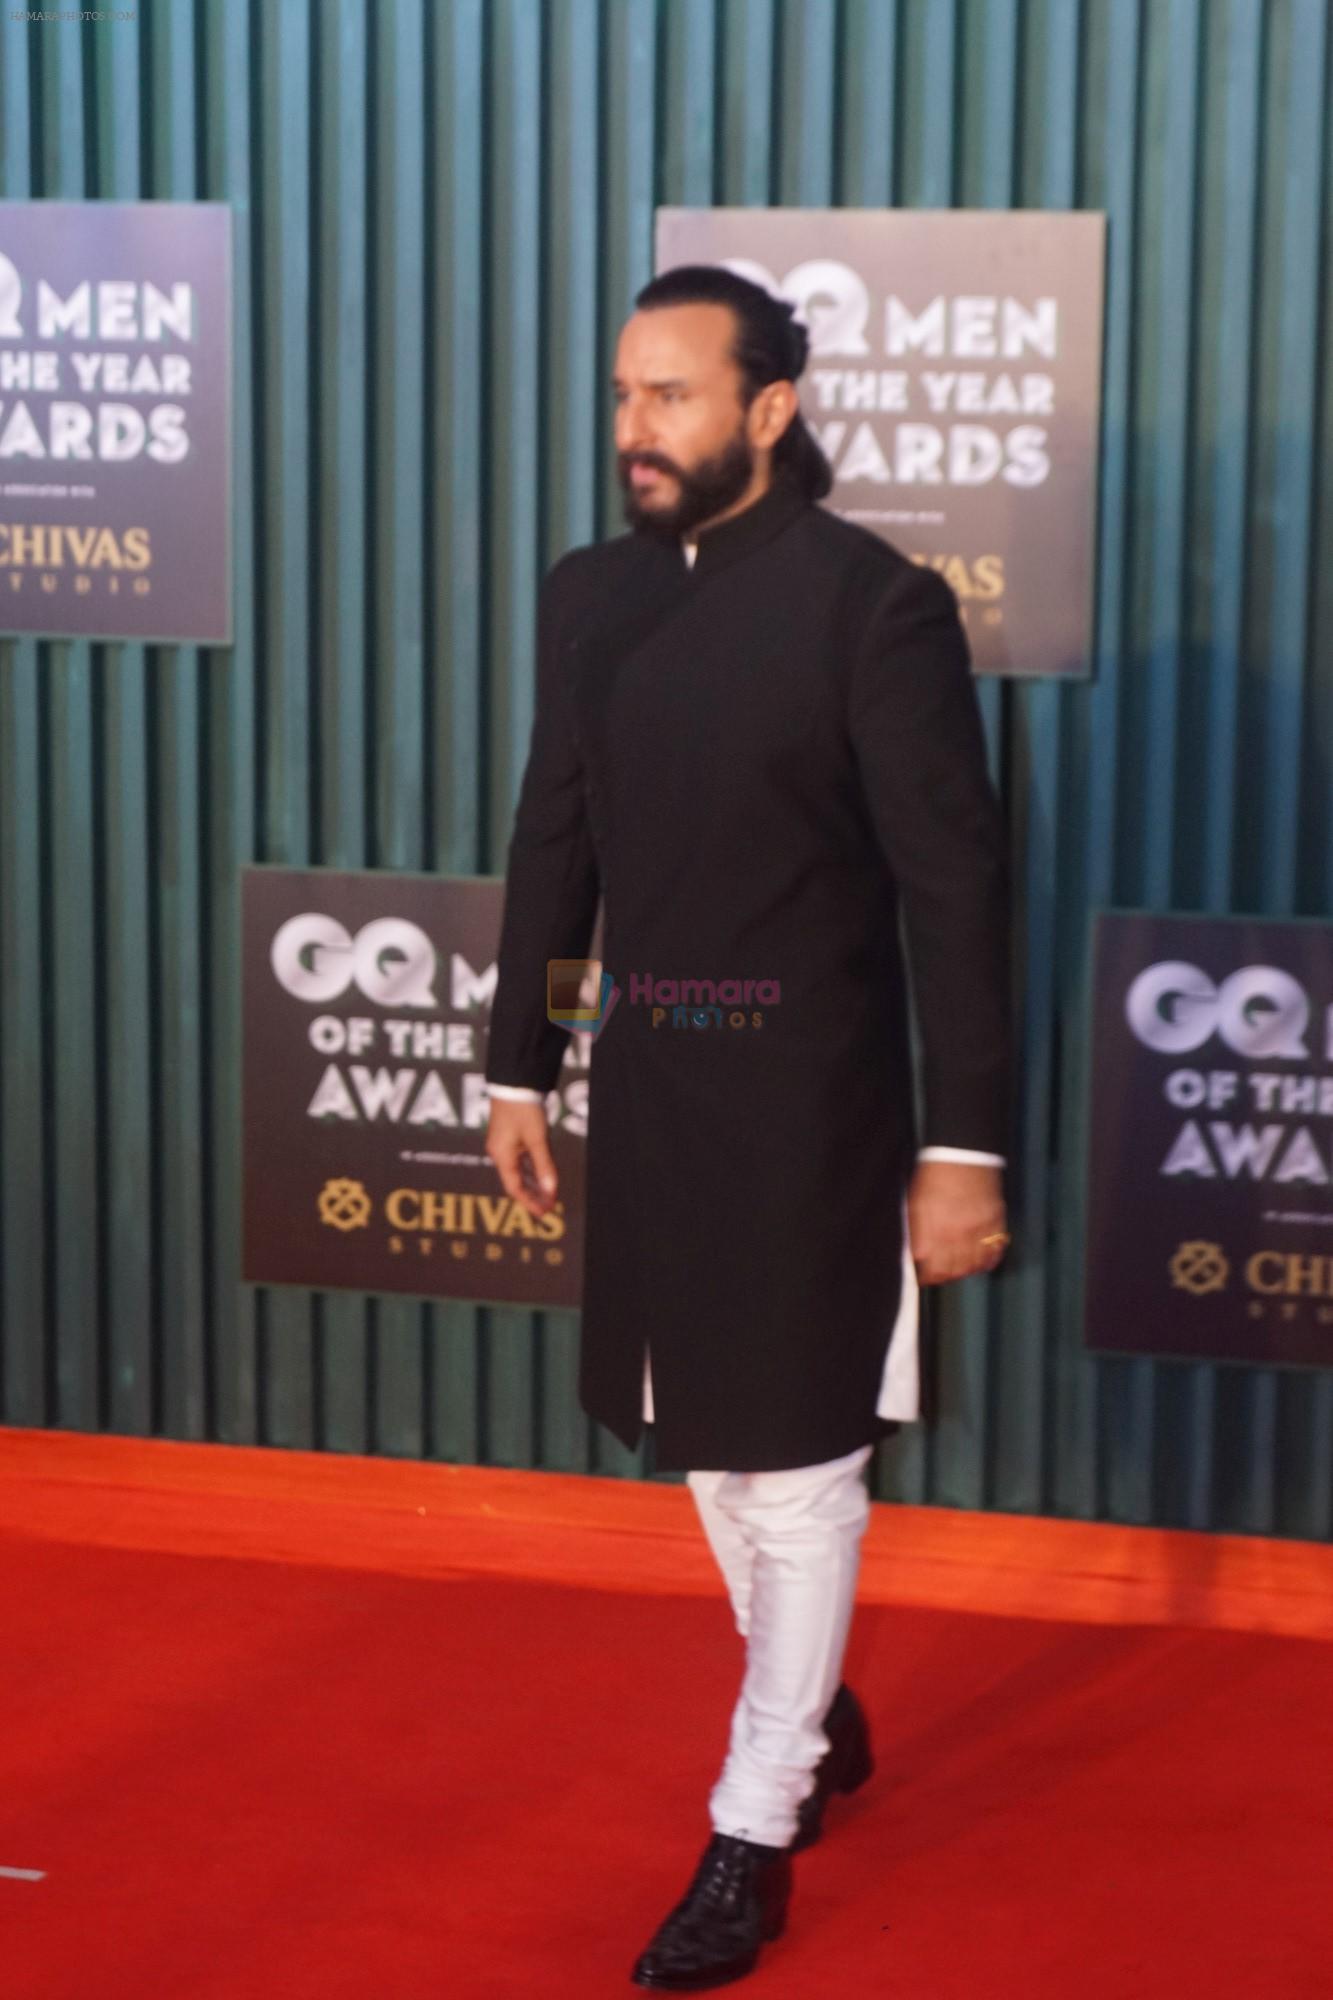 Saif Ali KHan at GQ Men of the Year Awards 2018 on 27th Sept 2018